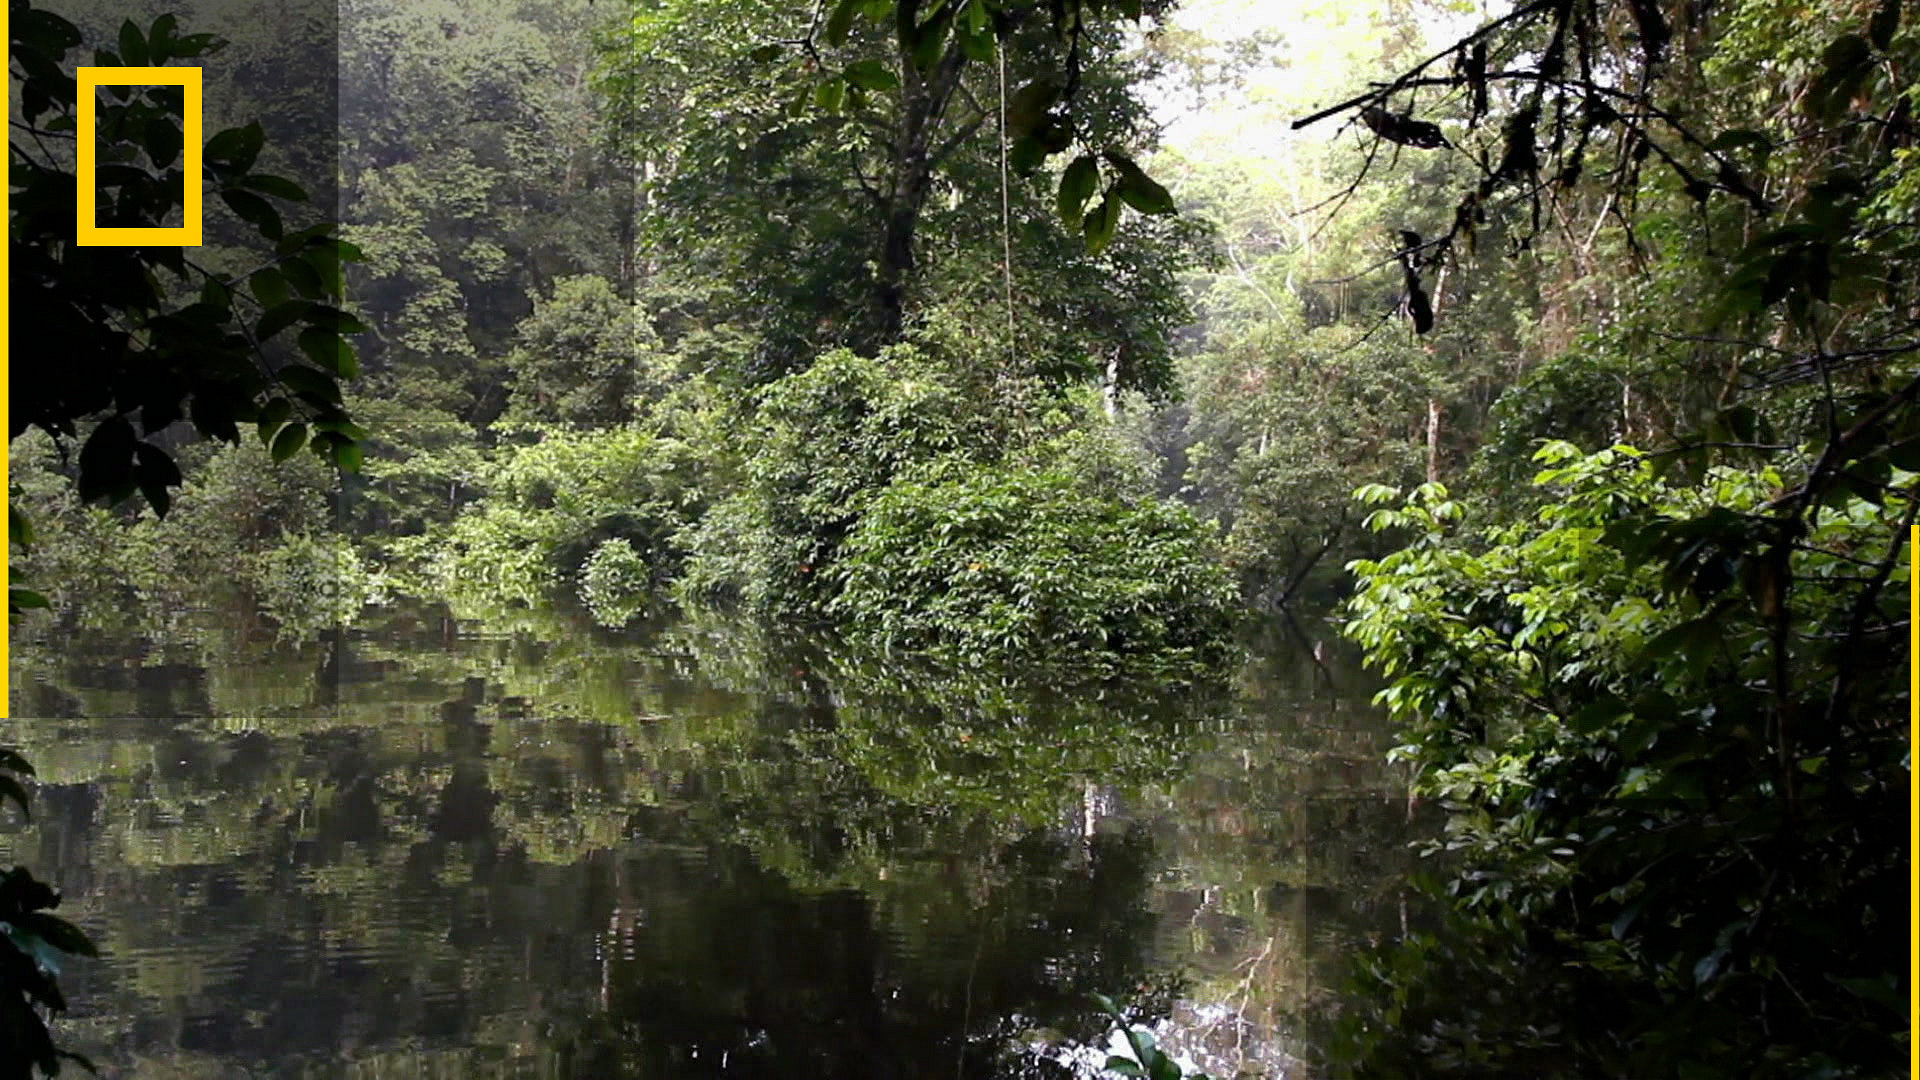 Amazon: The Great Flood